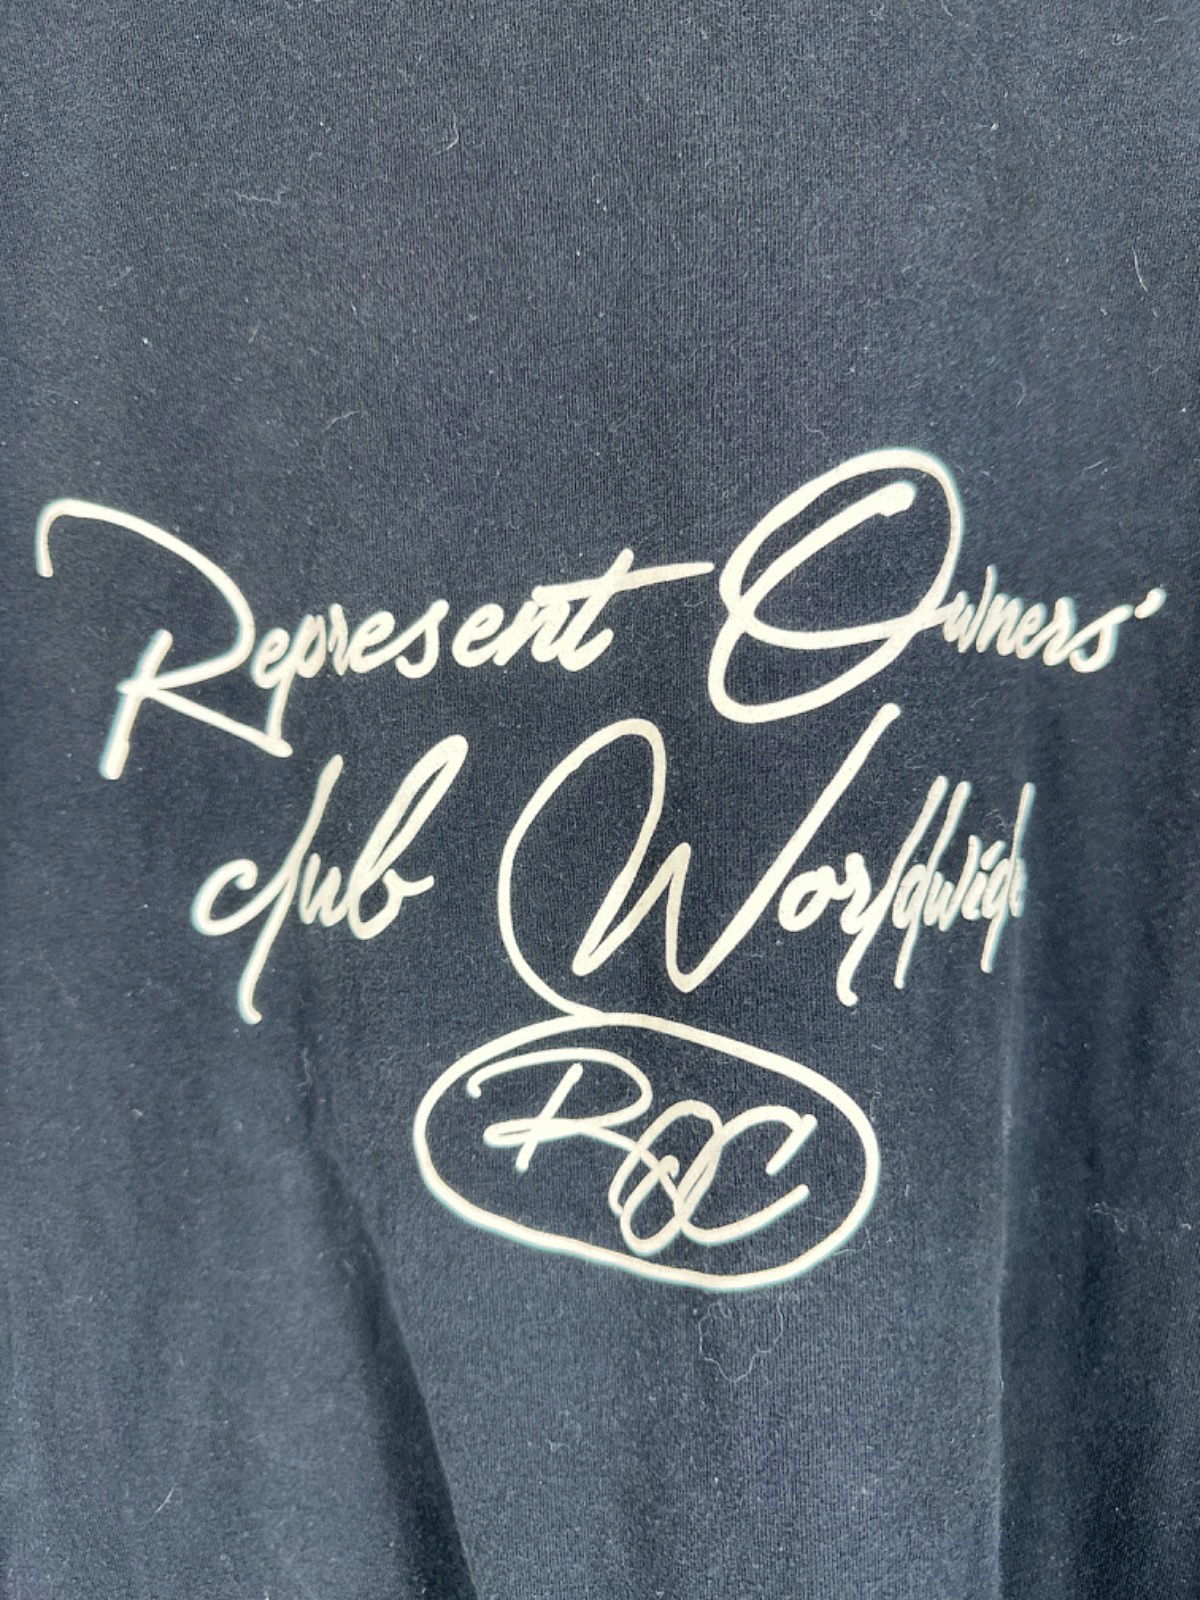 Represent Black Owners Club Worldwide T-Shirt XL